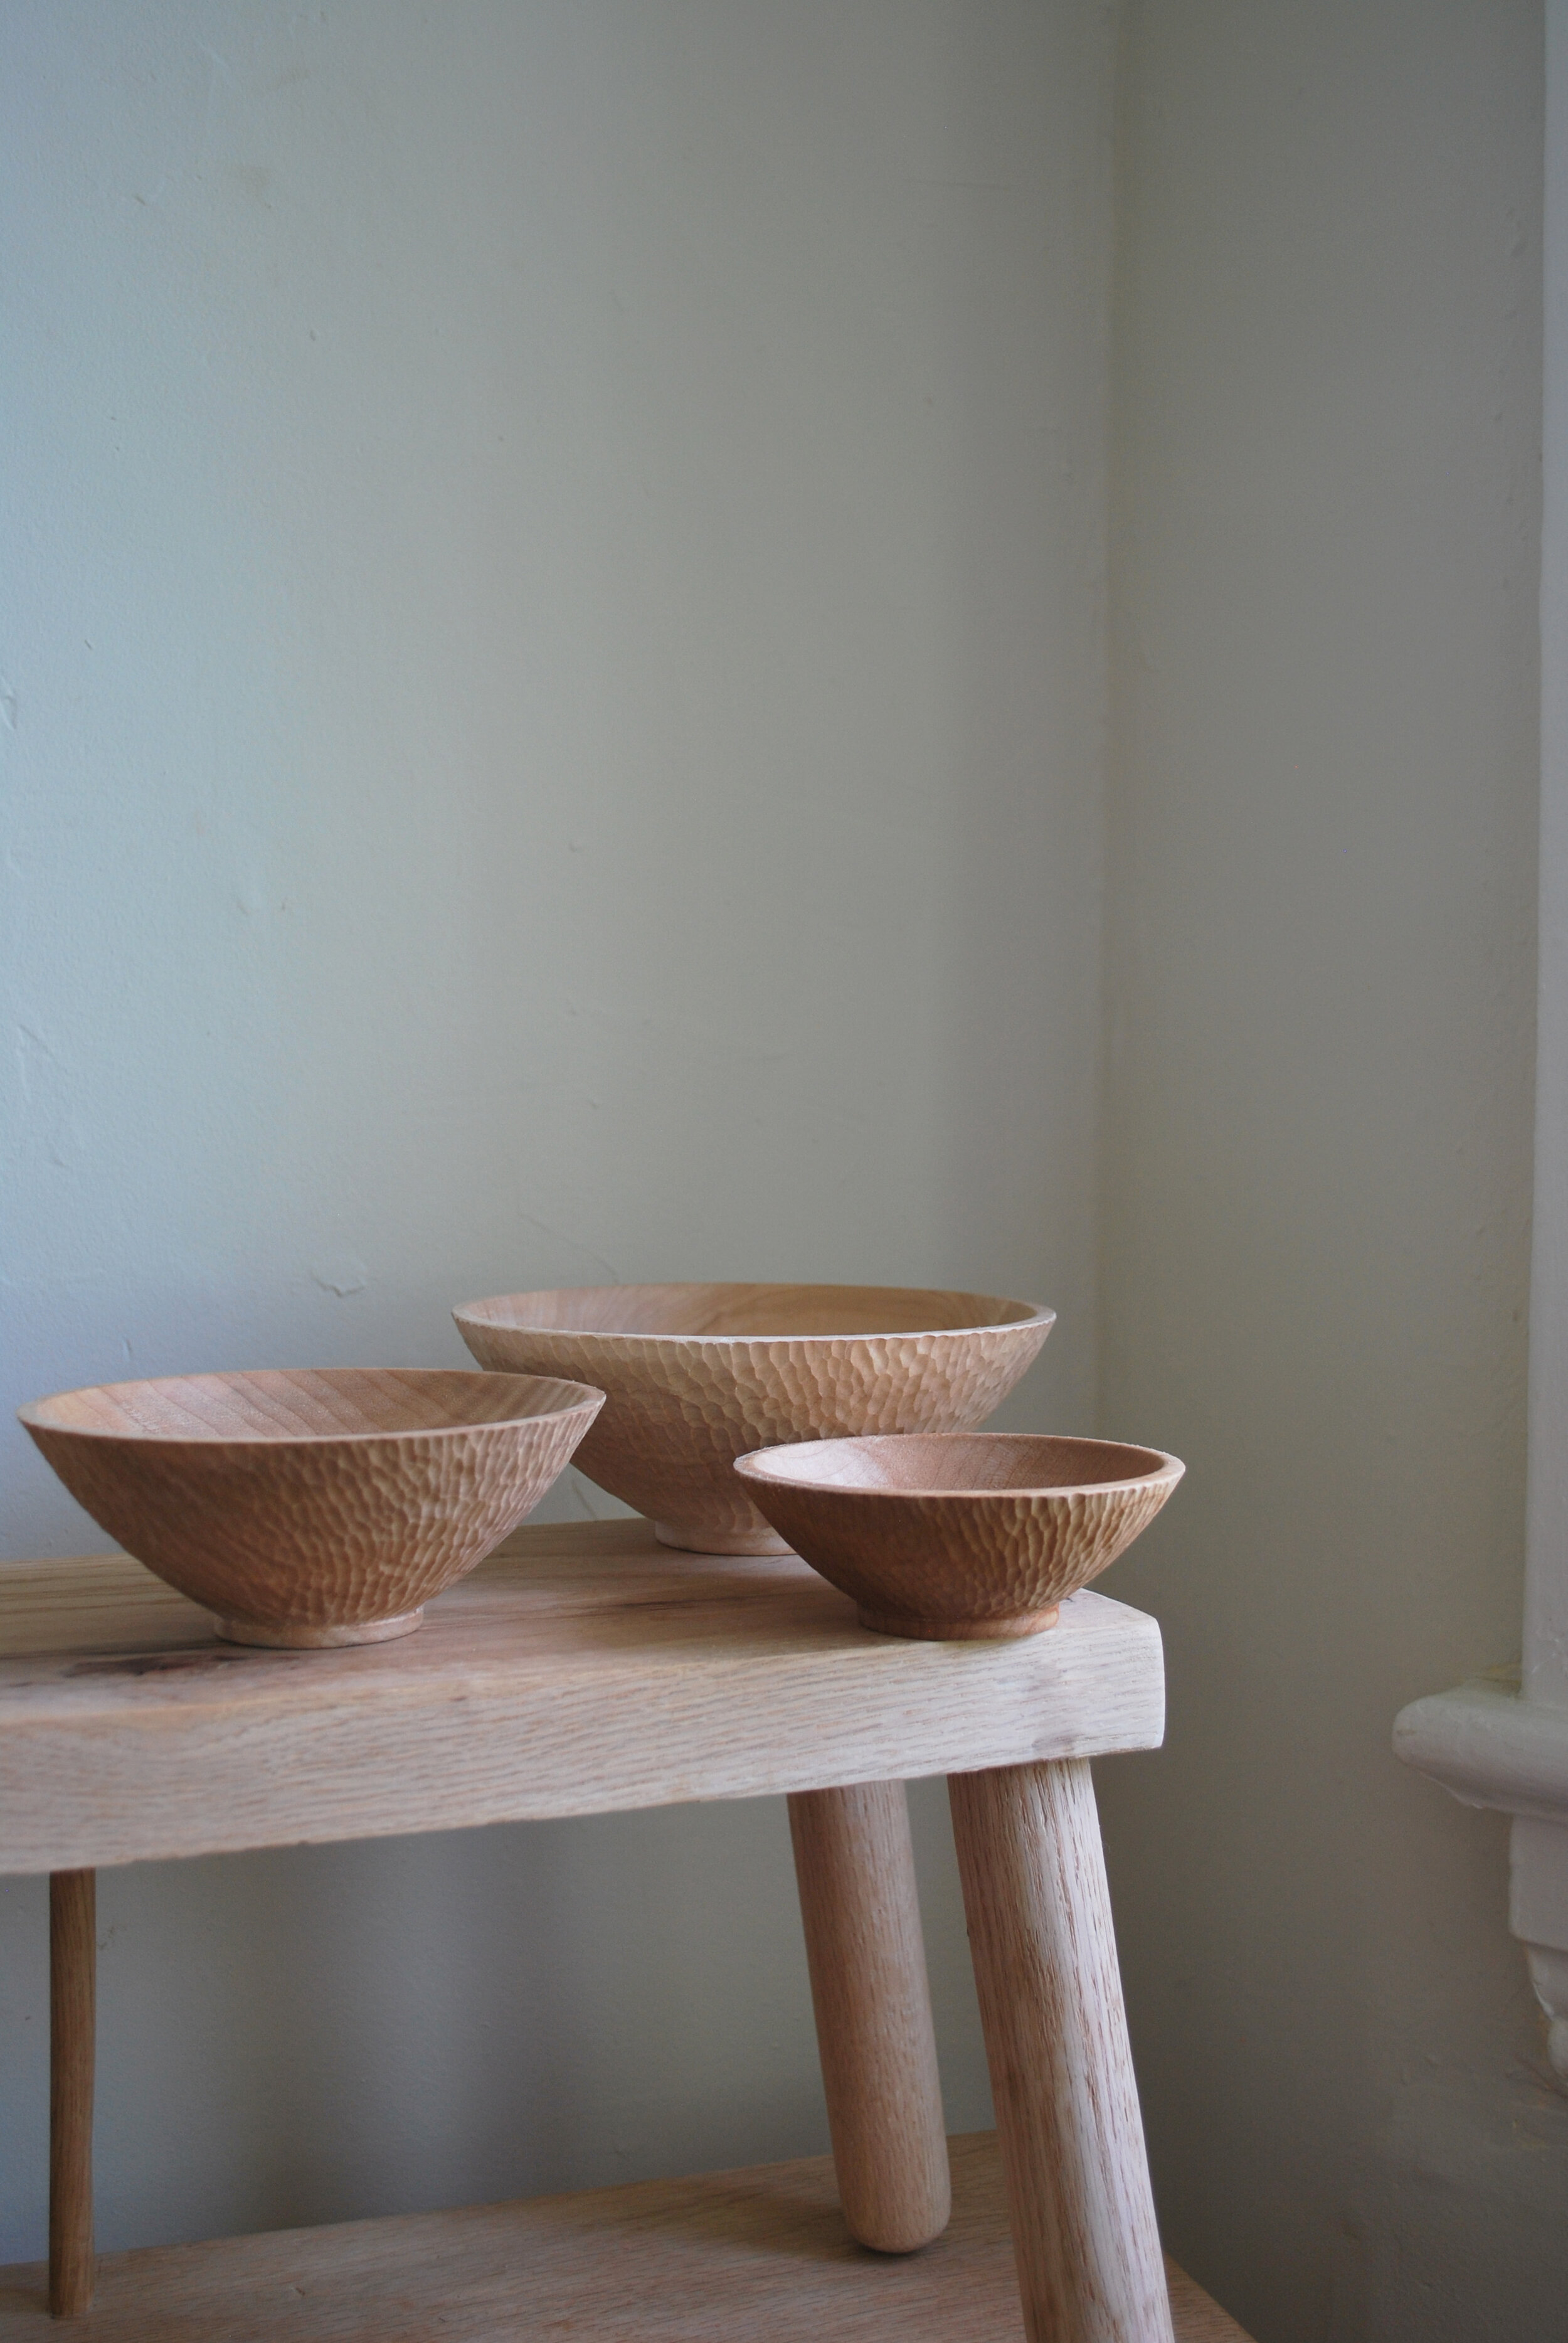 carvednesting bowls2.jpg